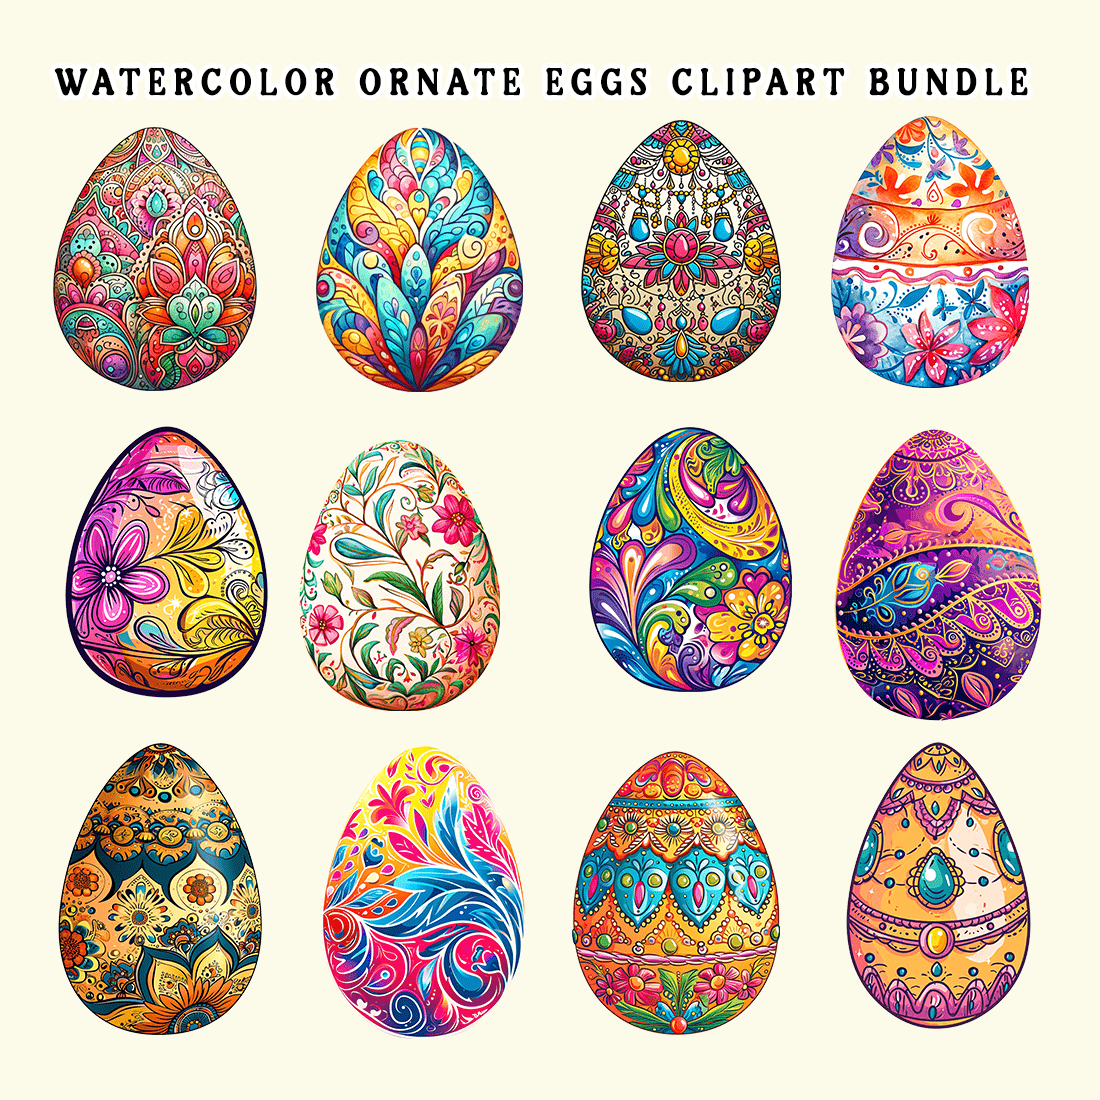 Watercolor Ornate Eggs Clipart Bundle preview image.